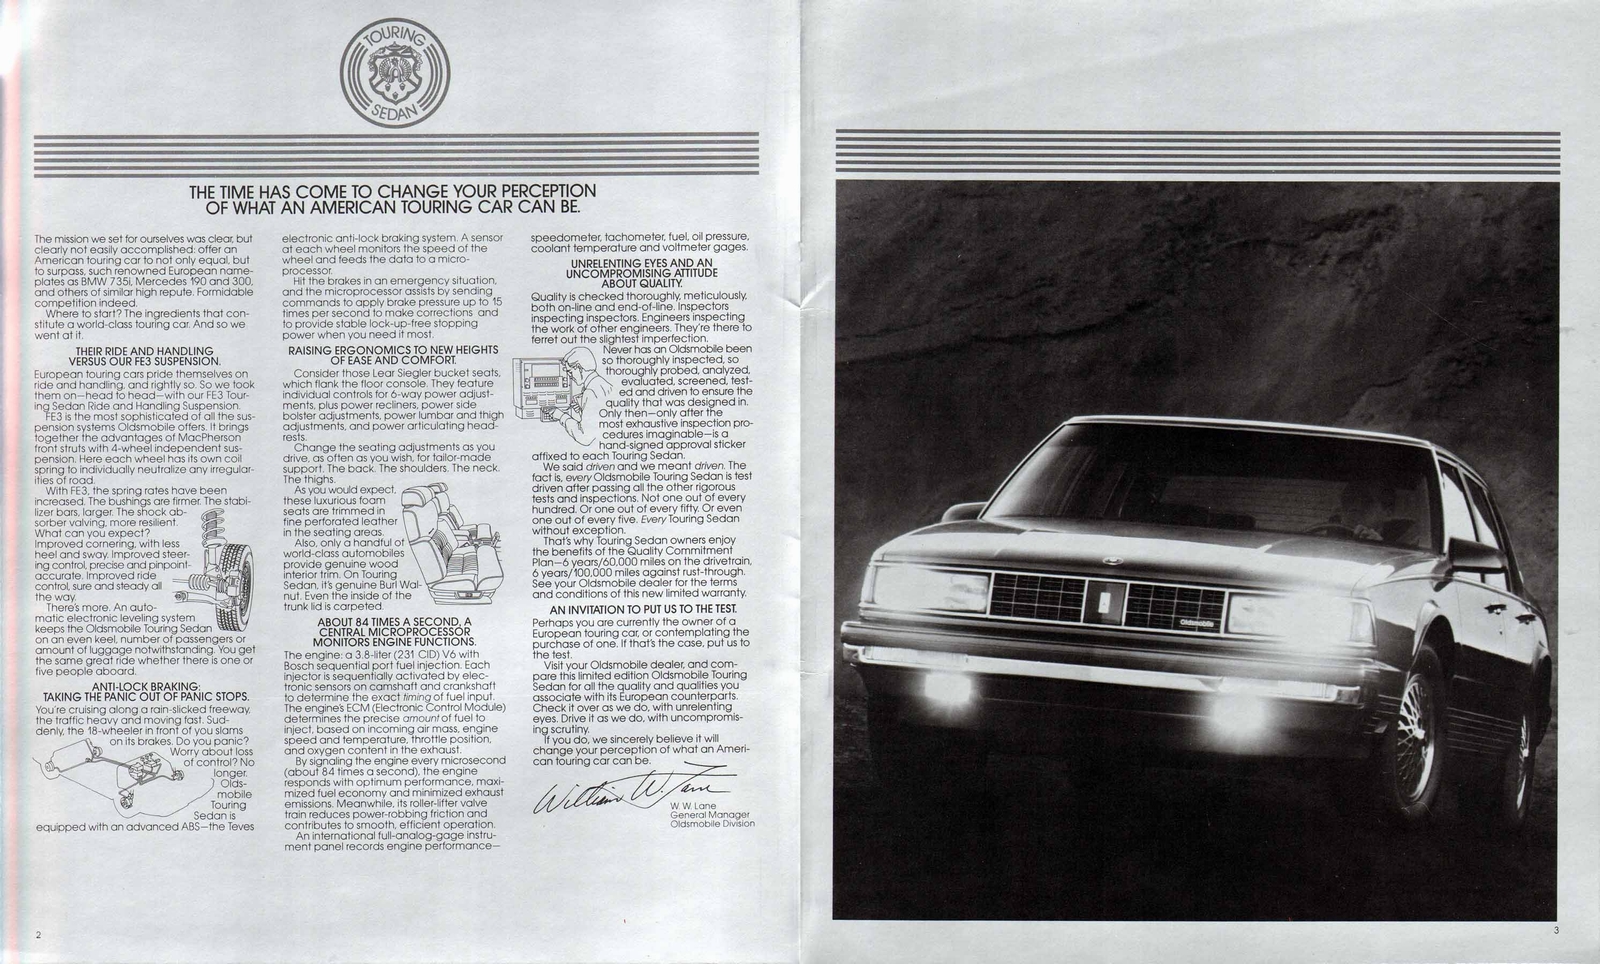 n_1987 Oldsmobile Touring Sedan Foldout-02-03.jpg